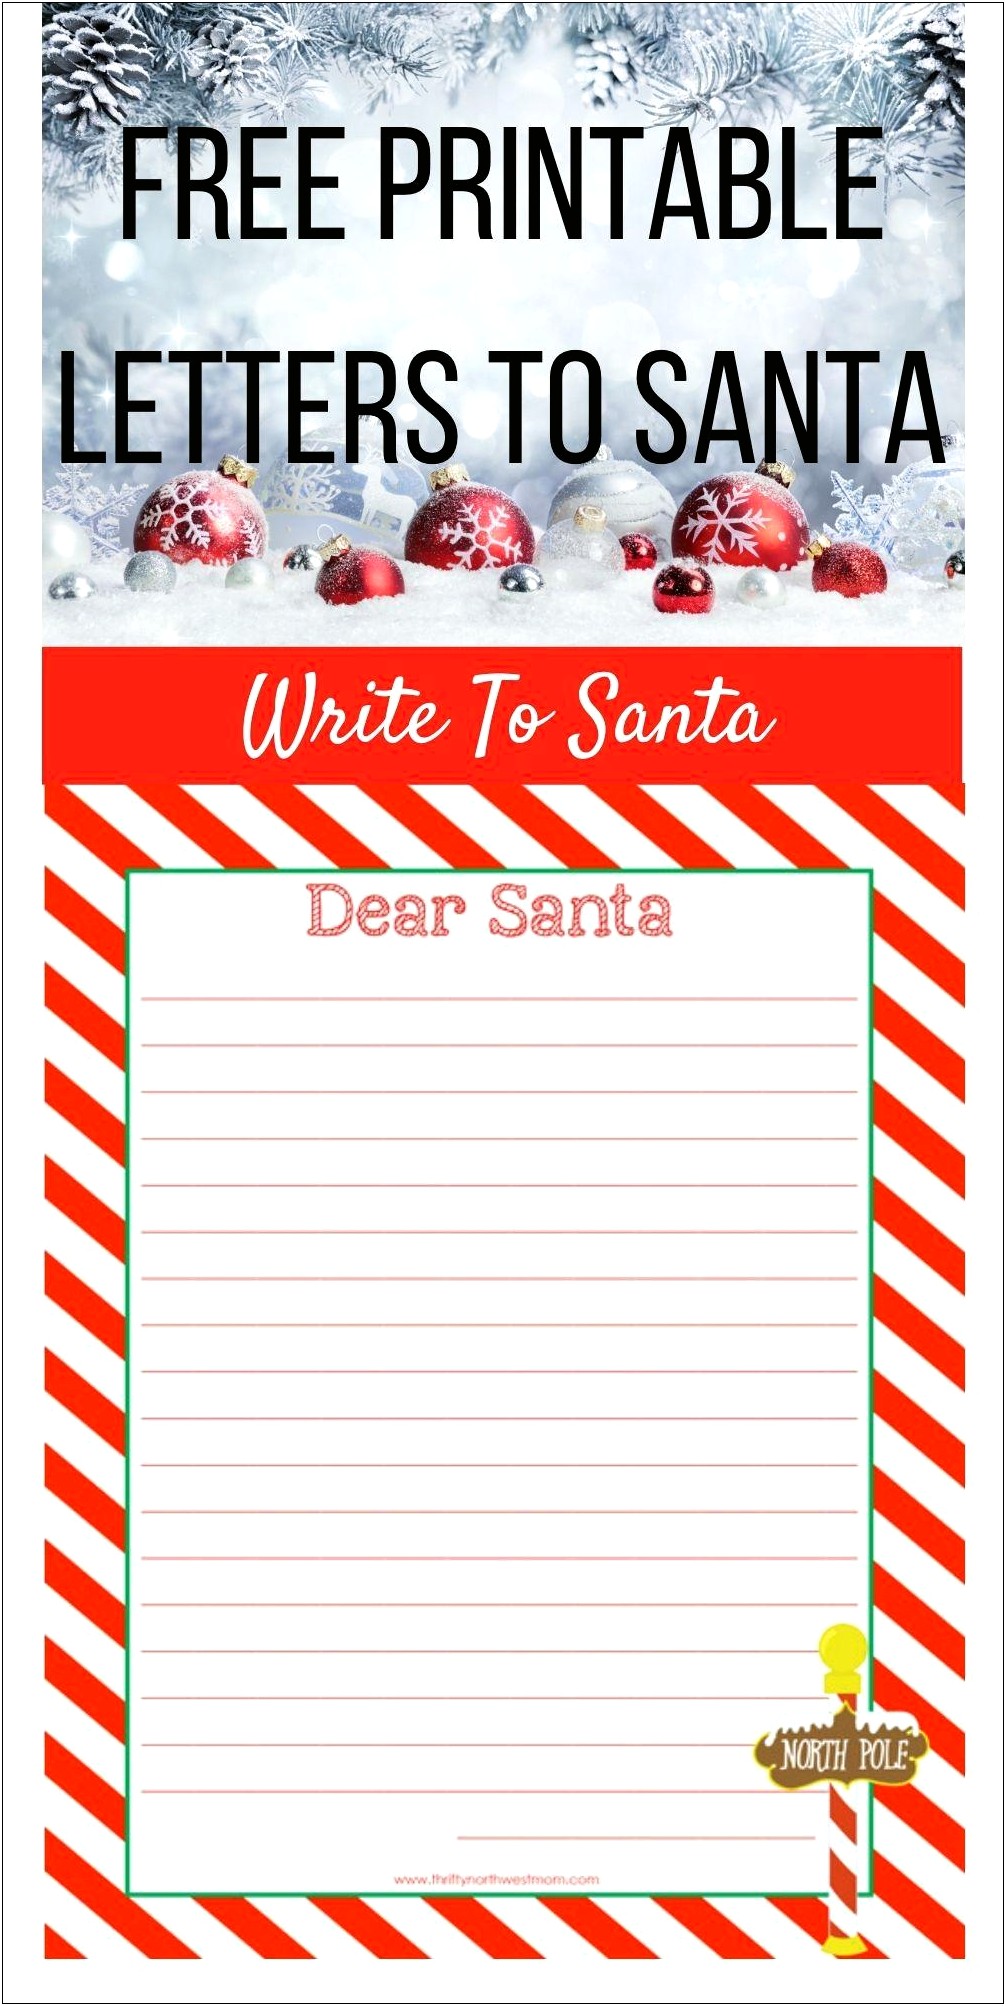 free-letter-to-santa-printable-template-templates-resume-designs-mwvrp6jj0m